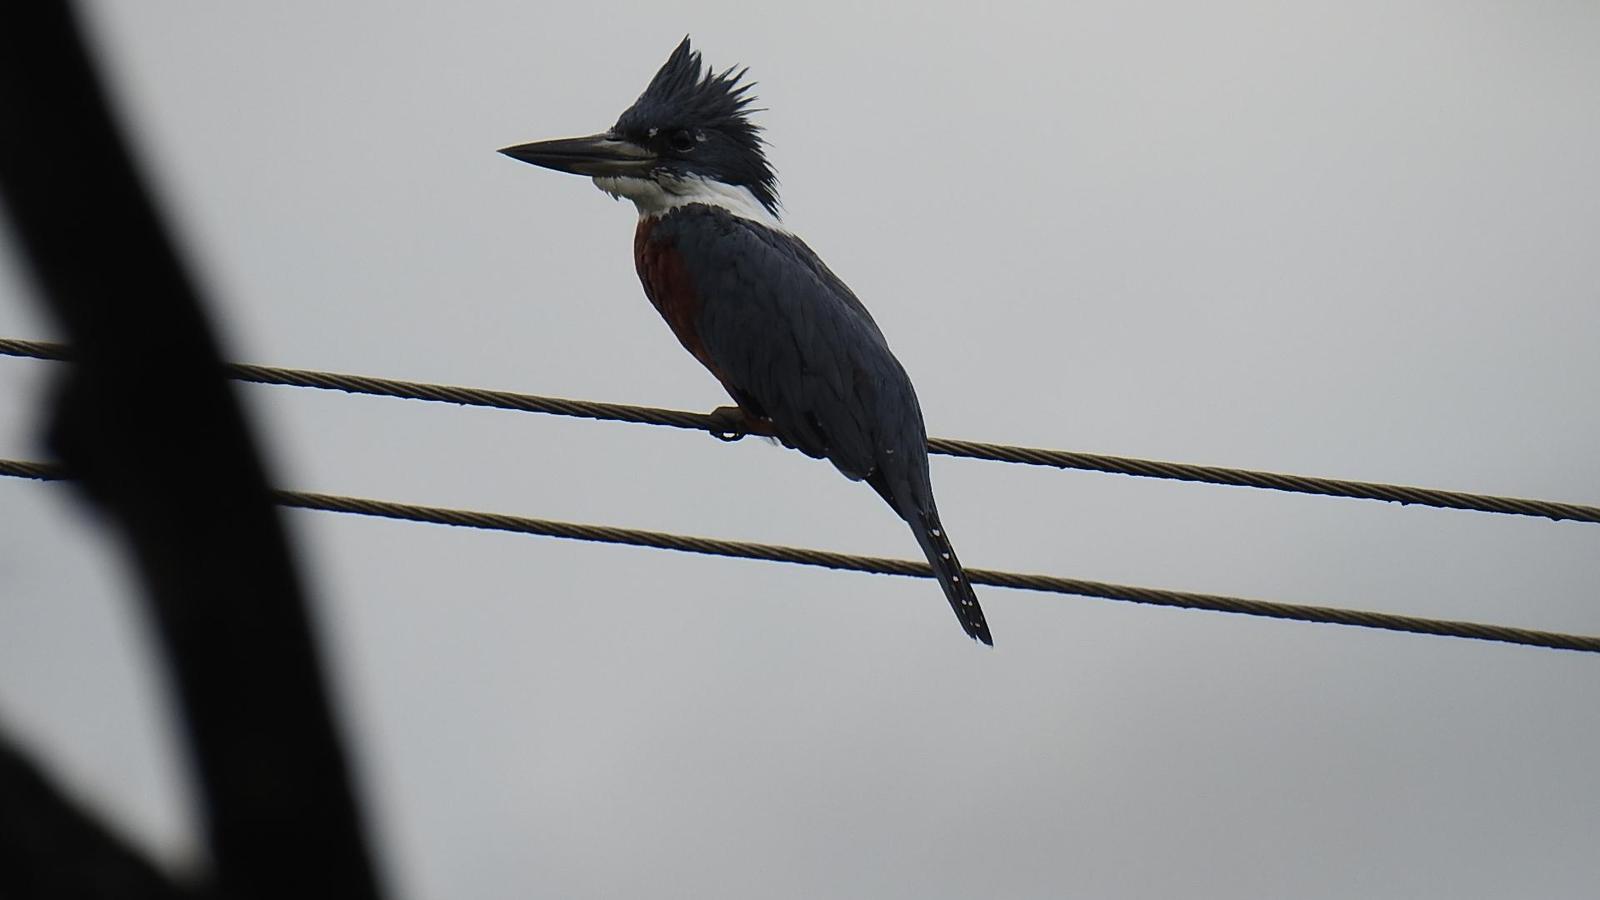 Ringed Kingfisher Photo by Julio Delgado